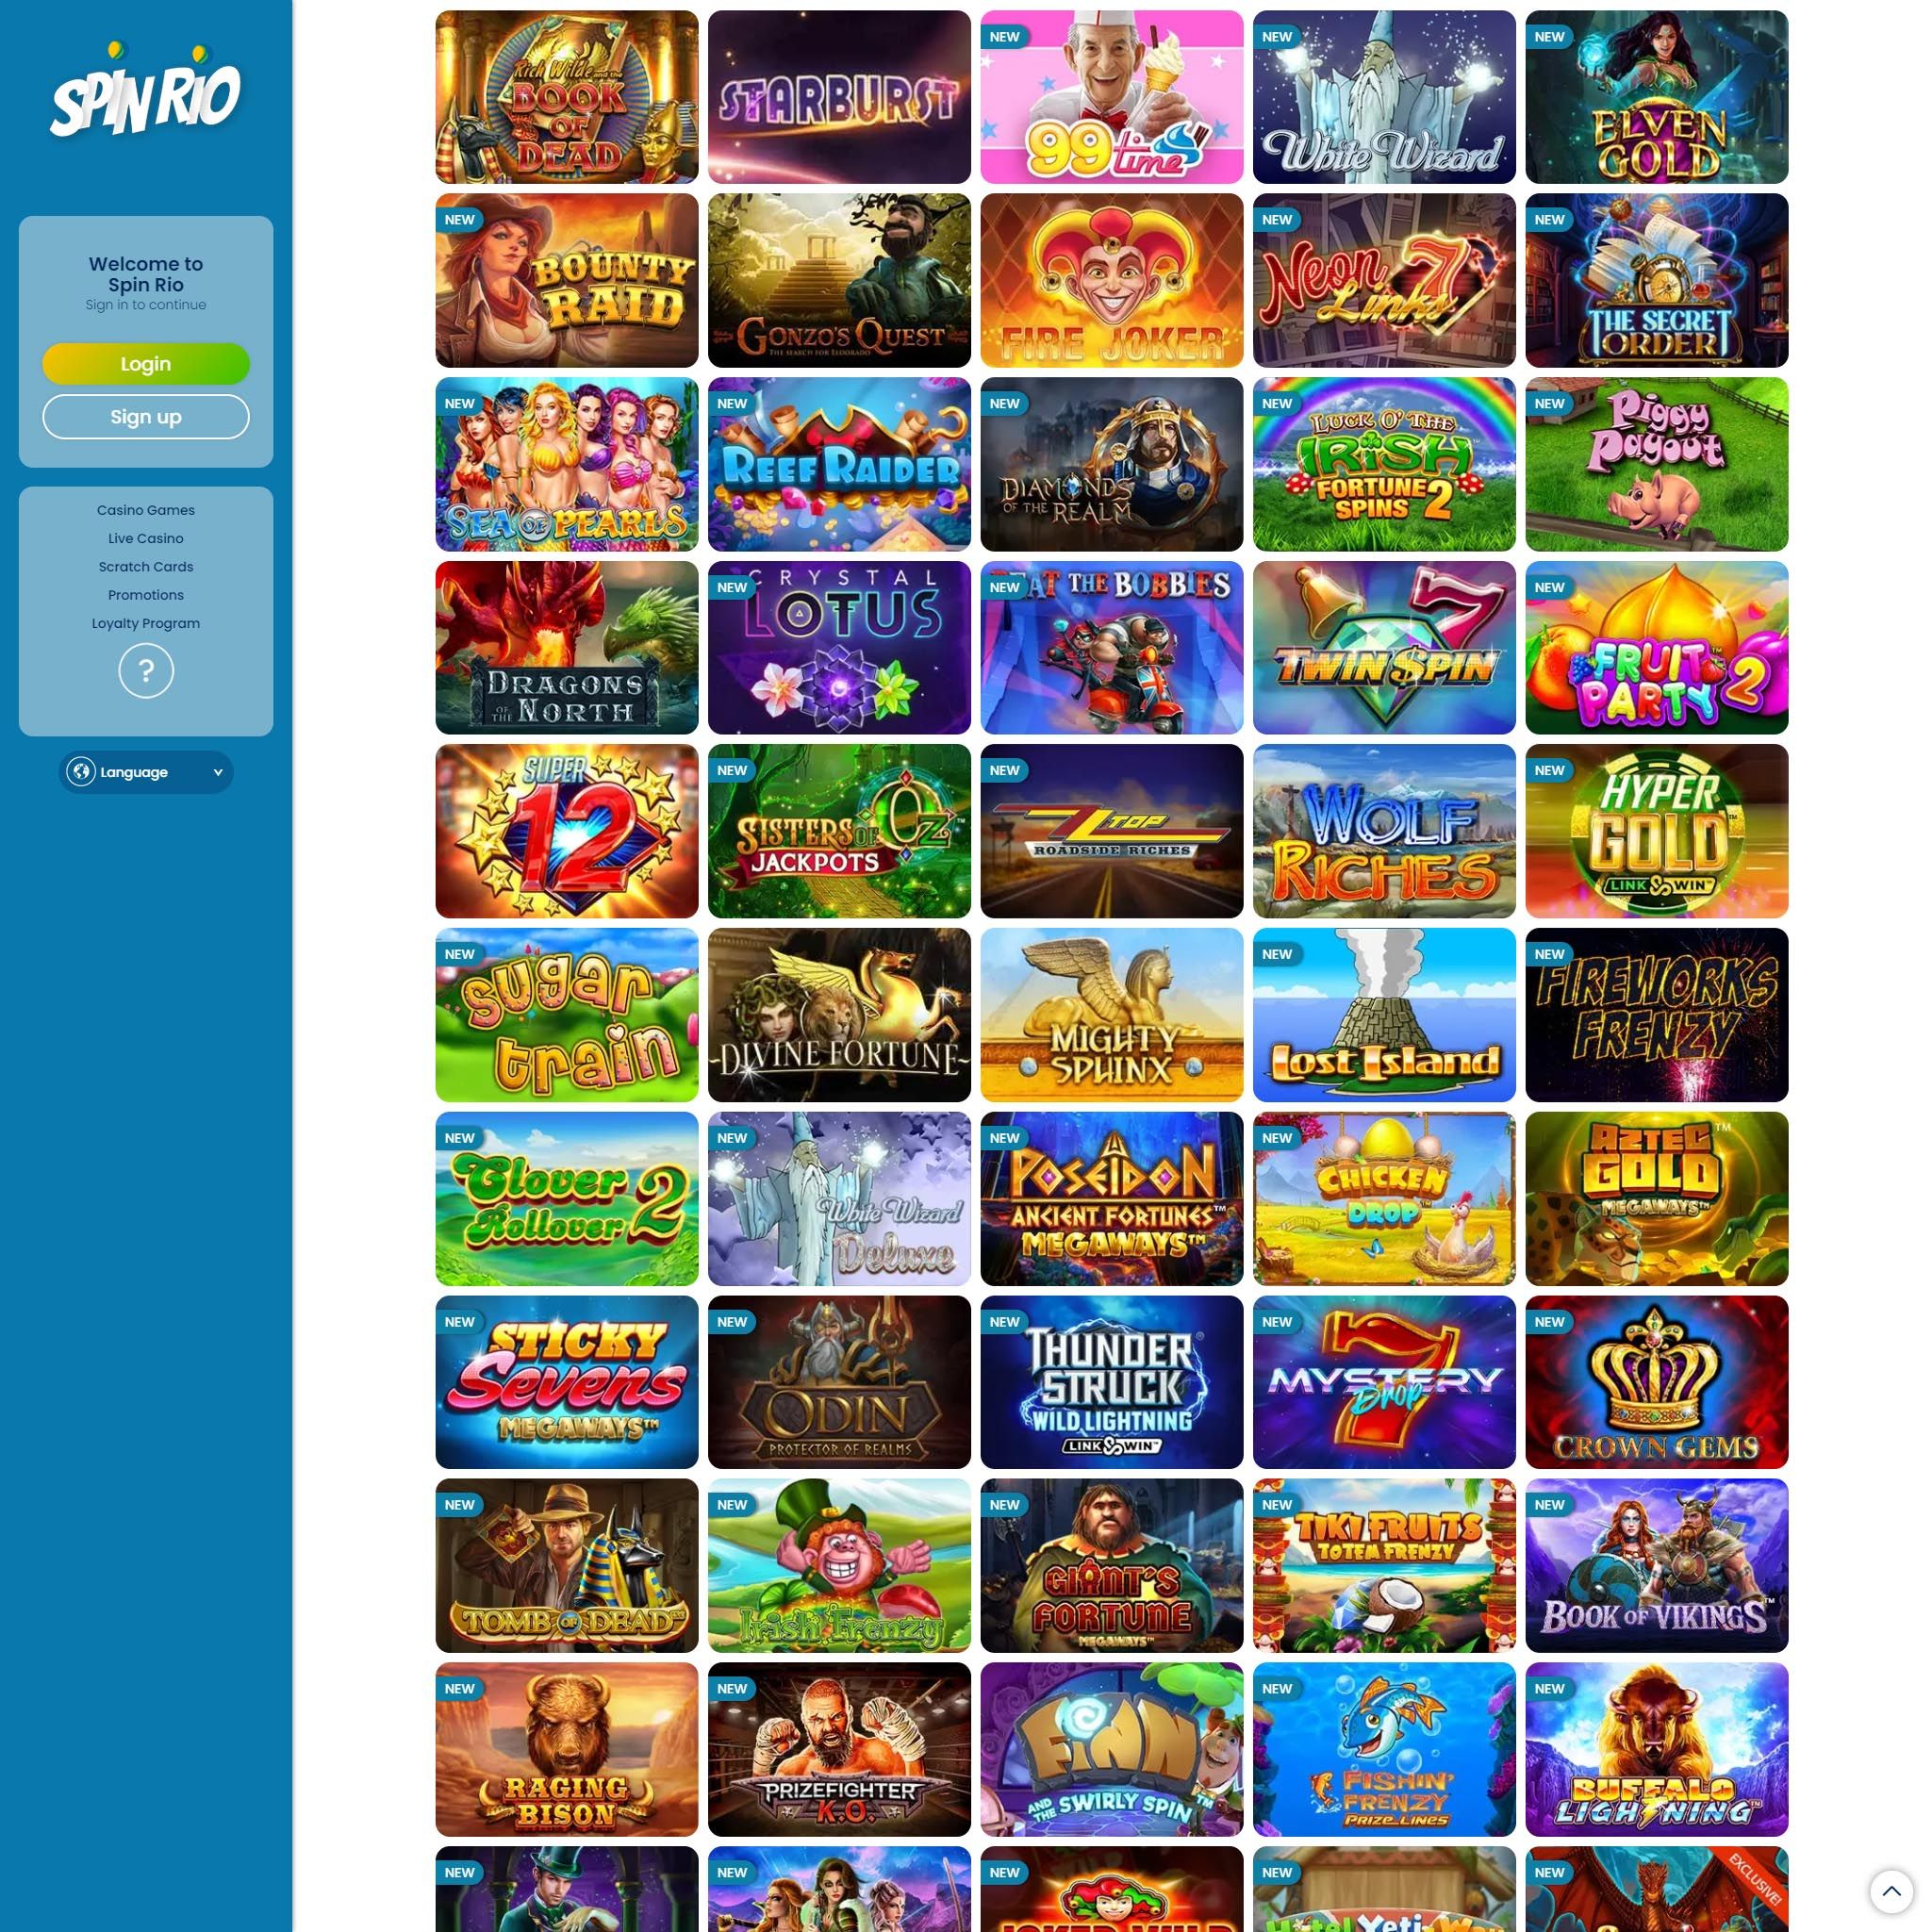 Spin Rio Casino full games catalogue